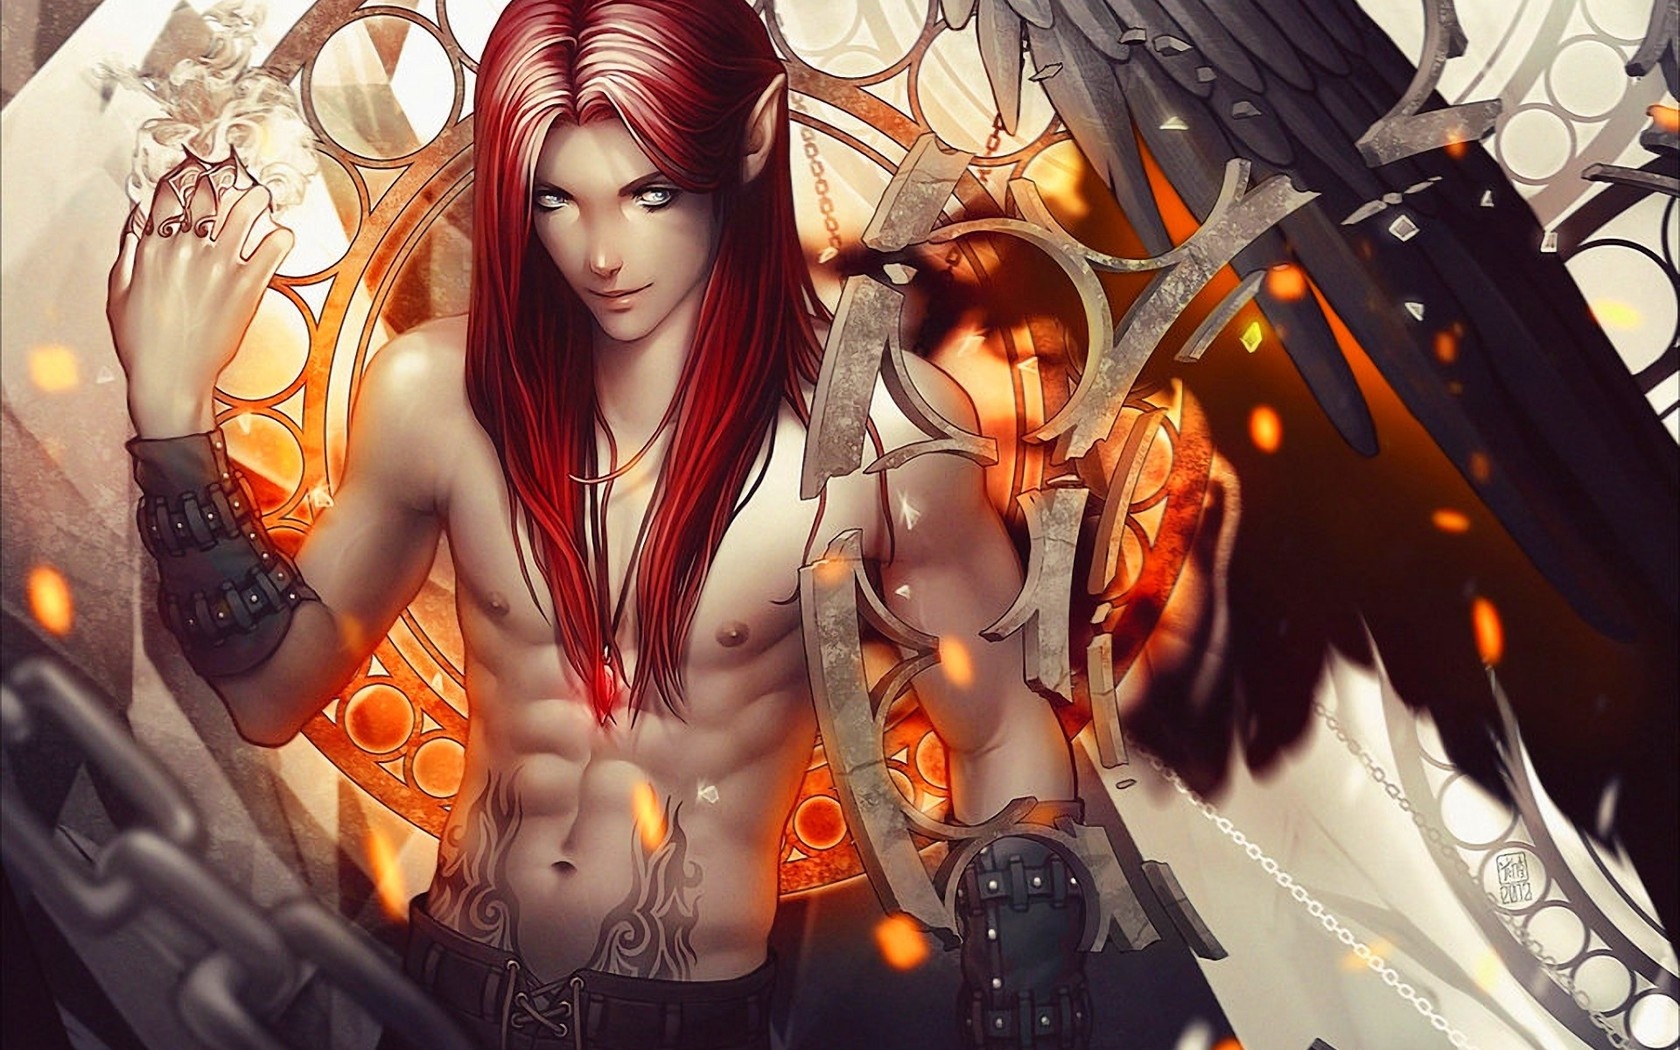 Hot Shirtless Muscle Man - Hot Blood Elf Male - HD Wallpaper 